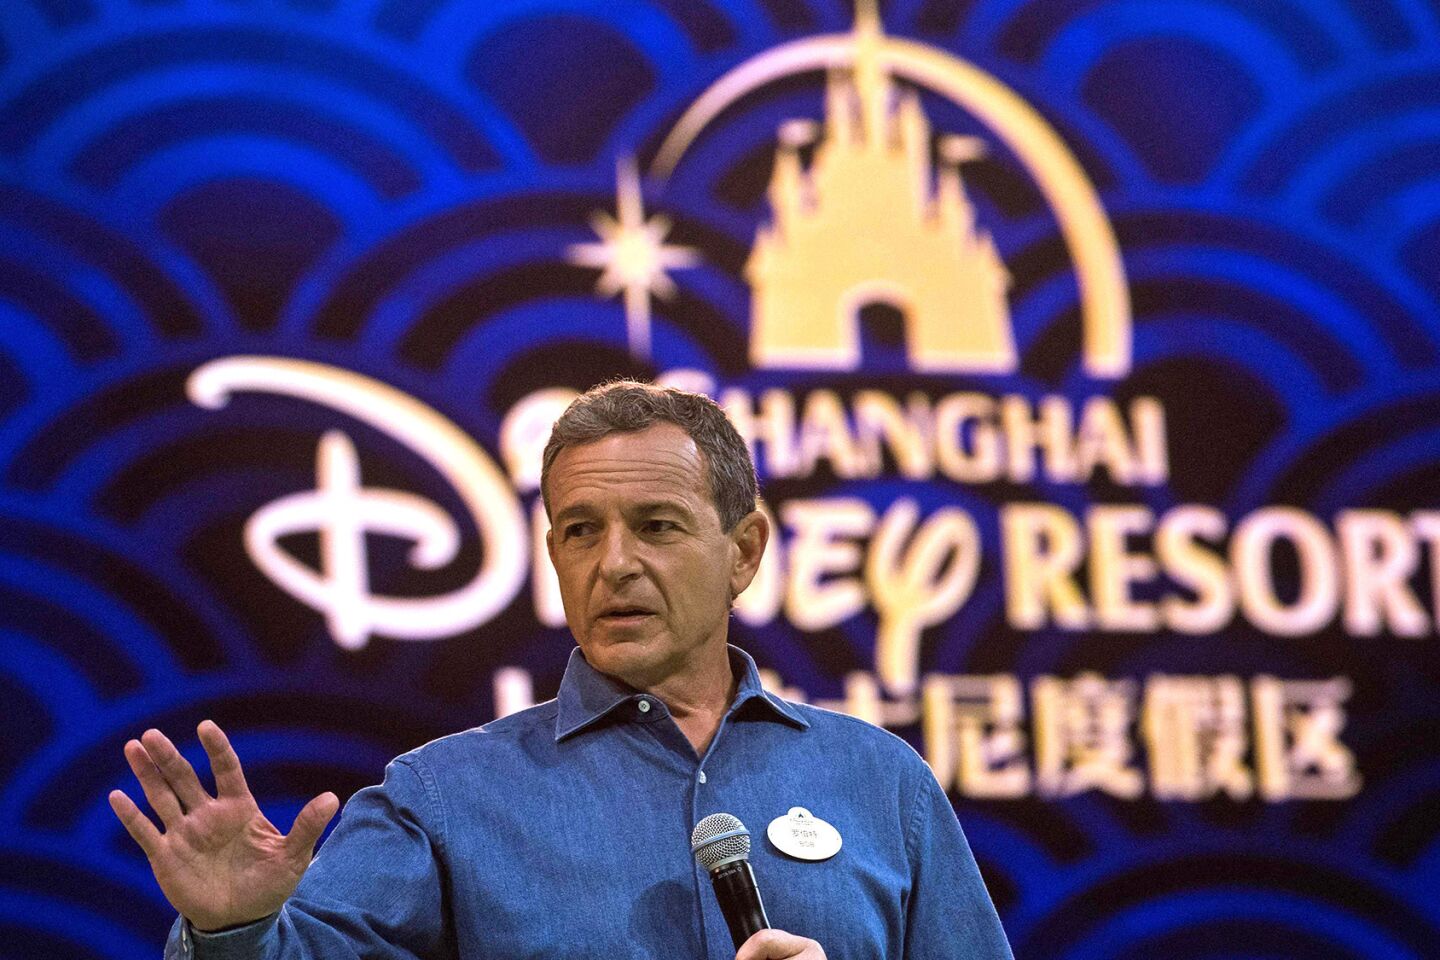 Shanghai Disney Resort opens